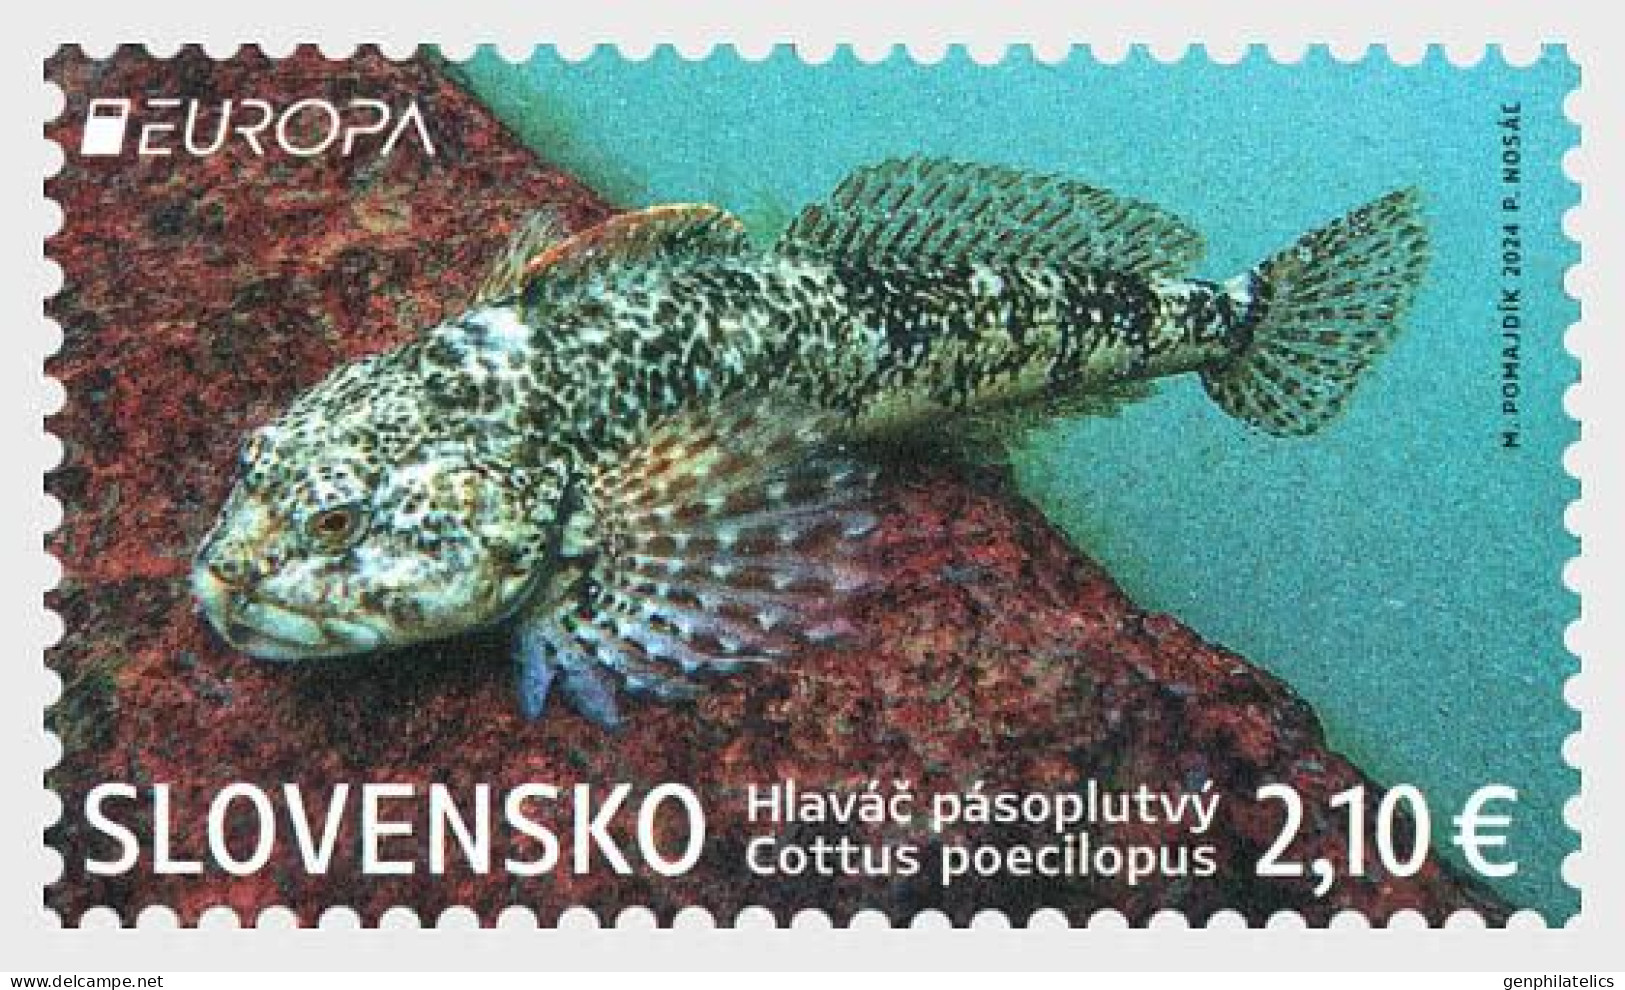 SLOVAKIA 2024 Europa CEPT. Underwater Fauna & Flora - Fine Stamp MNH - Nuevos